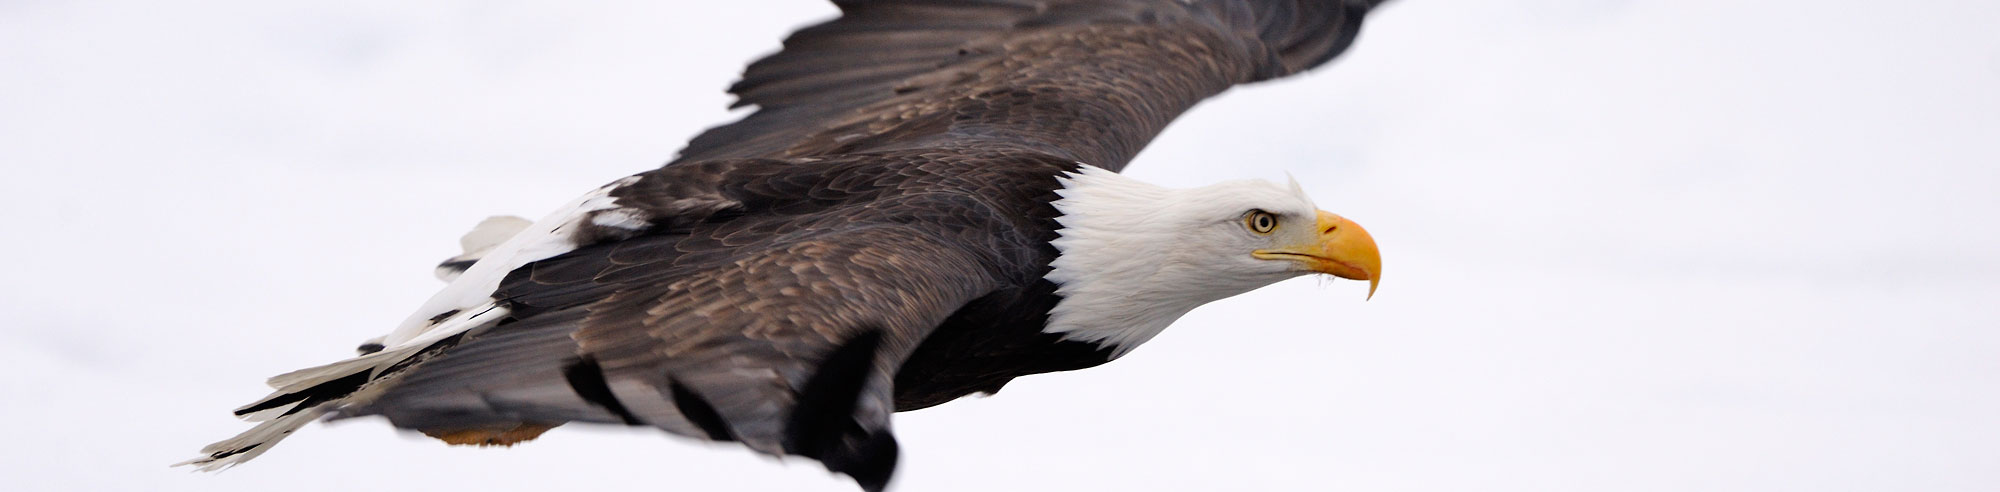 Bald eagle in flight, Chilkat River, Alaska.